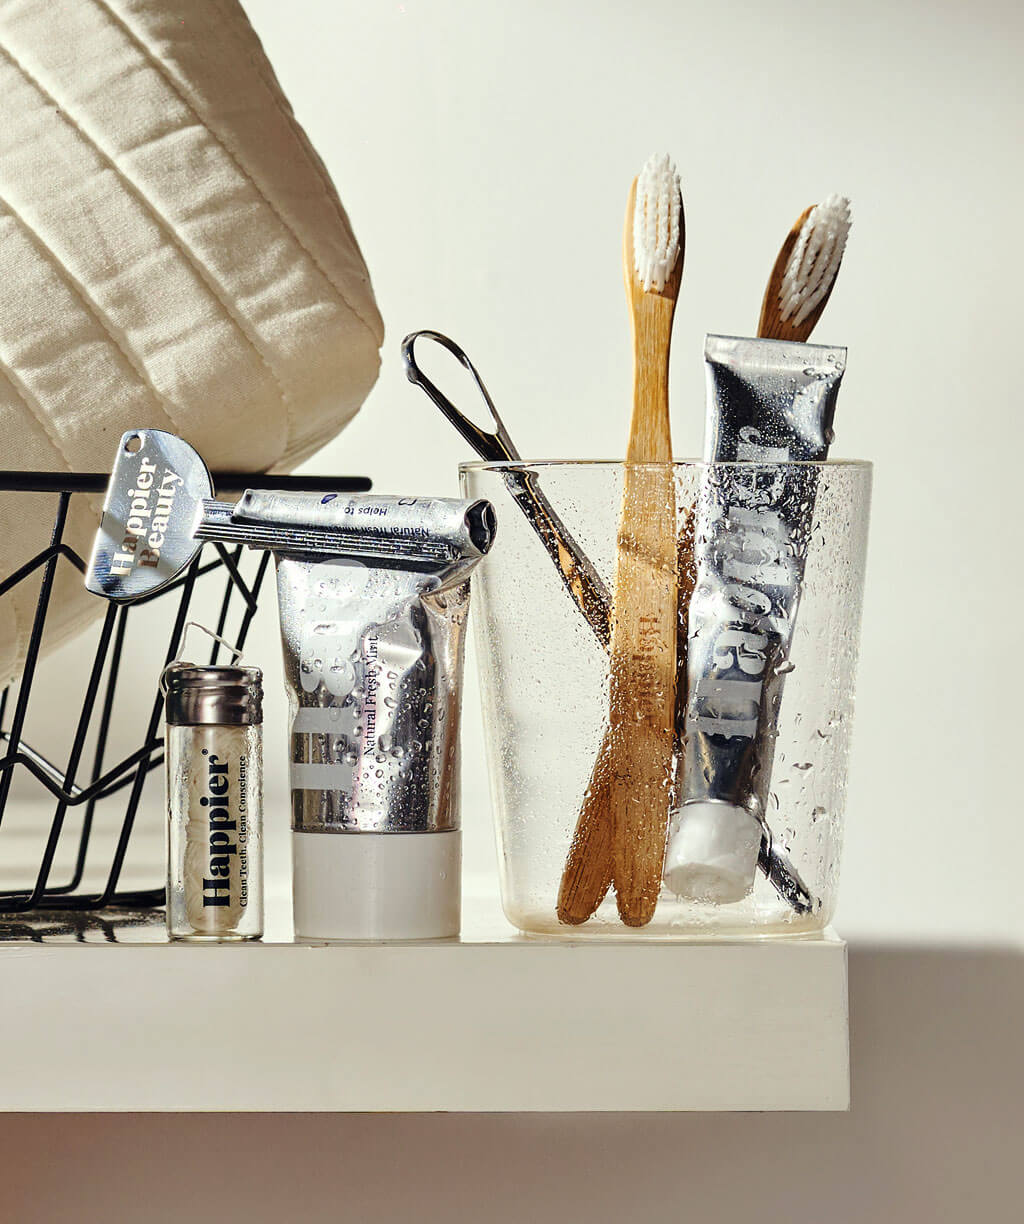 Happier dental hygiene essentials displayed on a shelf - Welcome offer kit